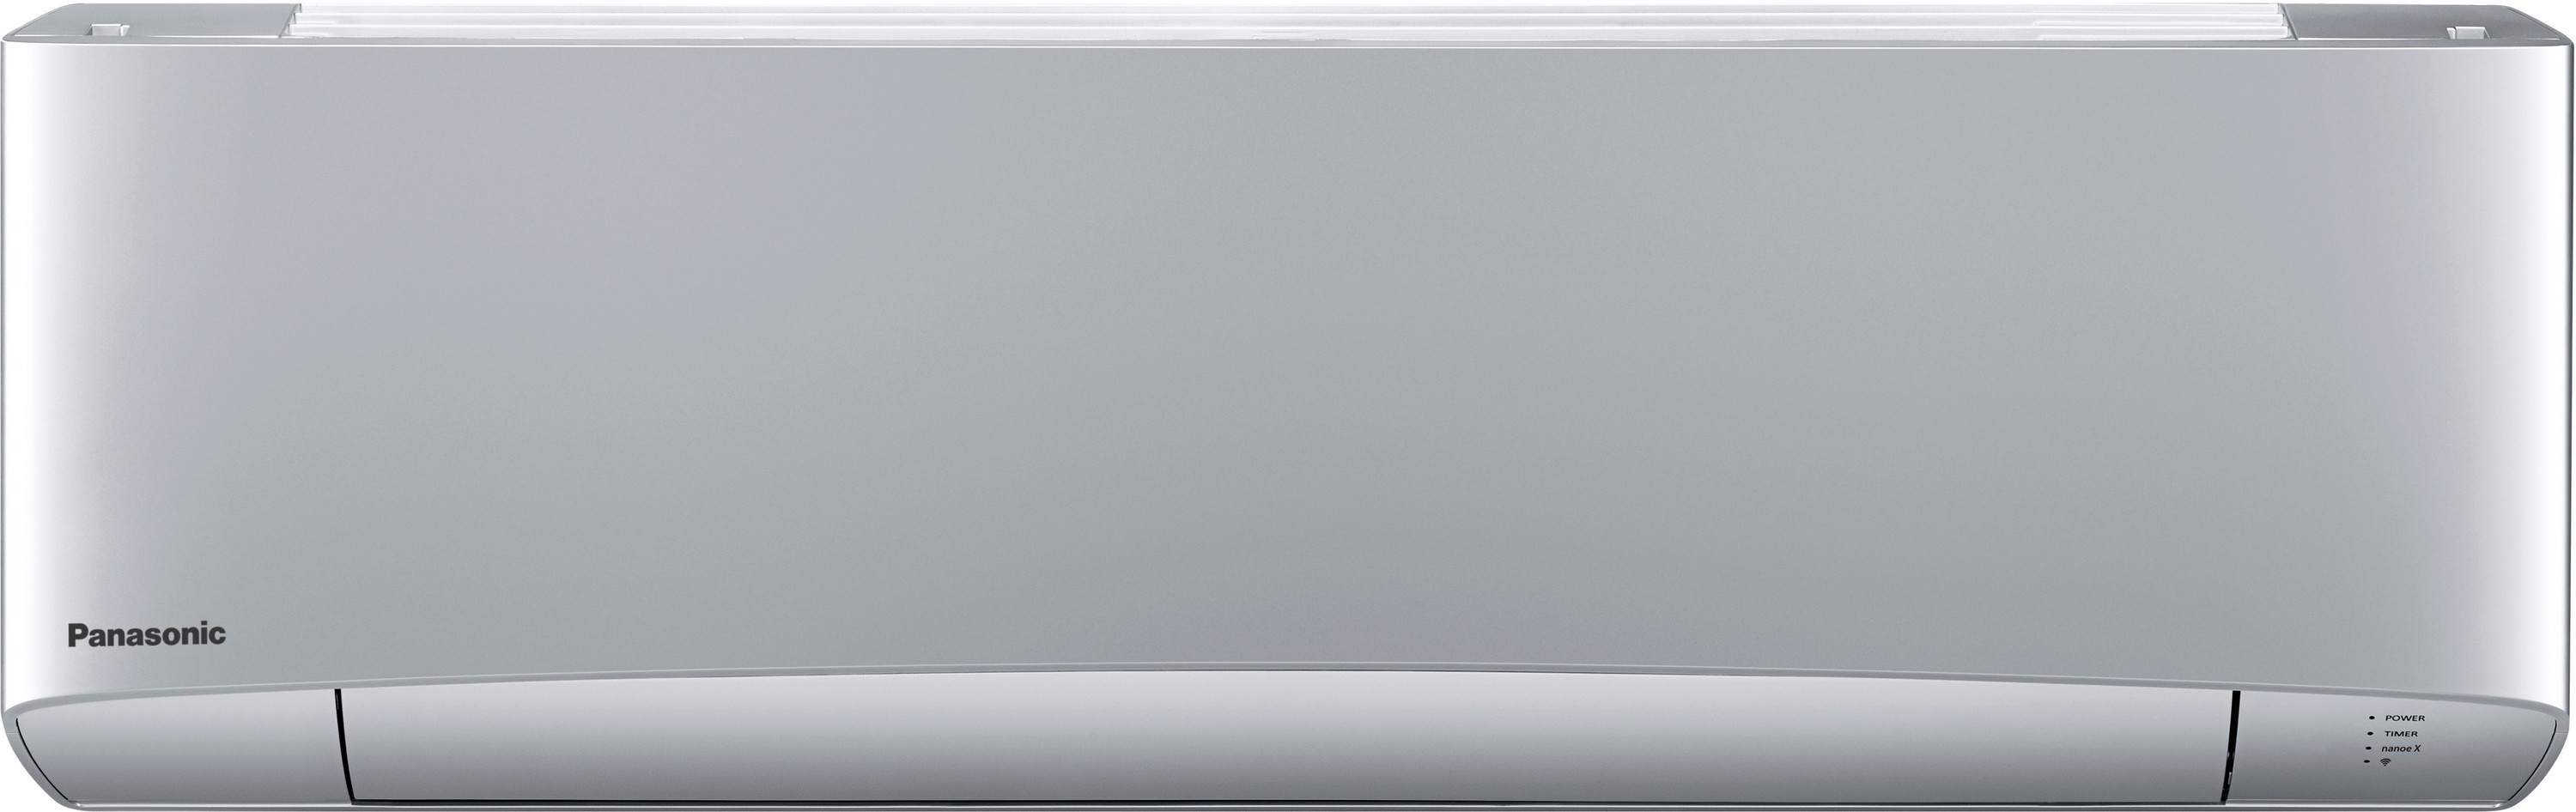 Кондиционер сплит-система Panasonic Flagship Silver CS/CU-XZ35TKEW цена 68998.00 грн - фотография 2